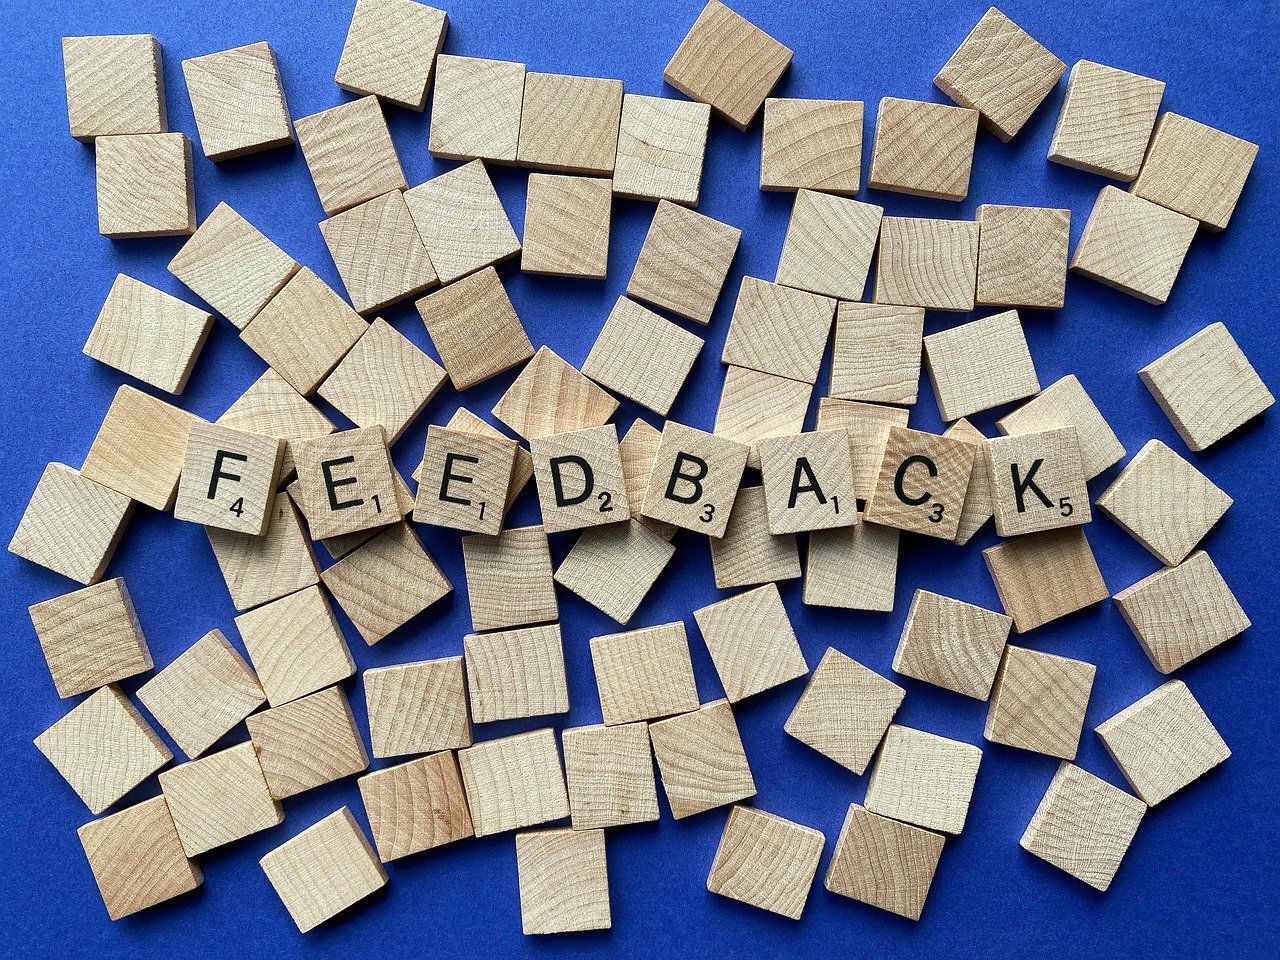 16 Customer Feedback Examples Of Companies Using Feedback To Their Advantage